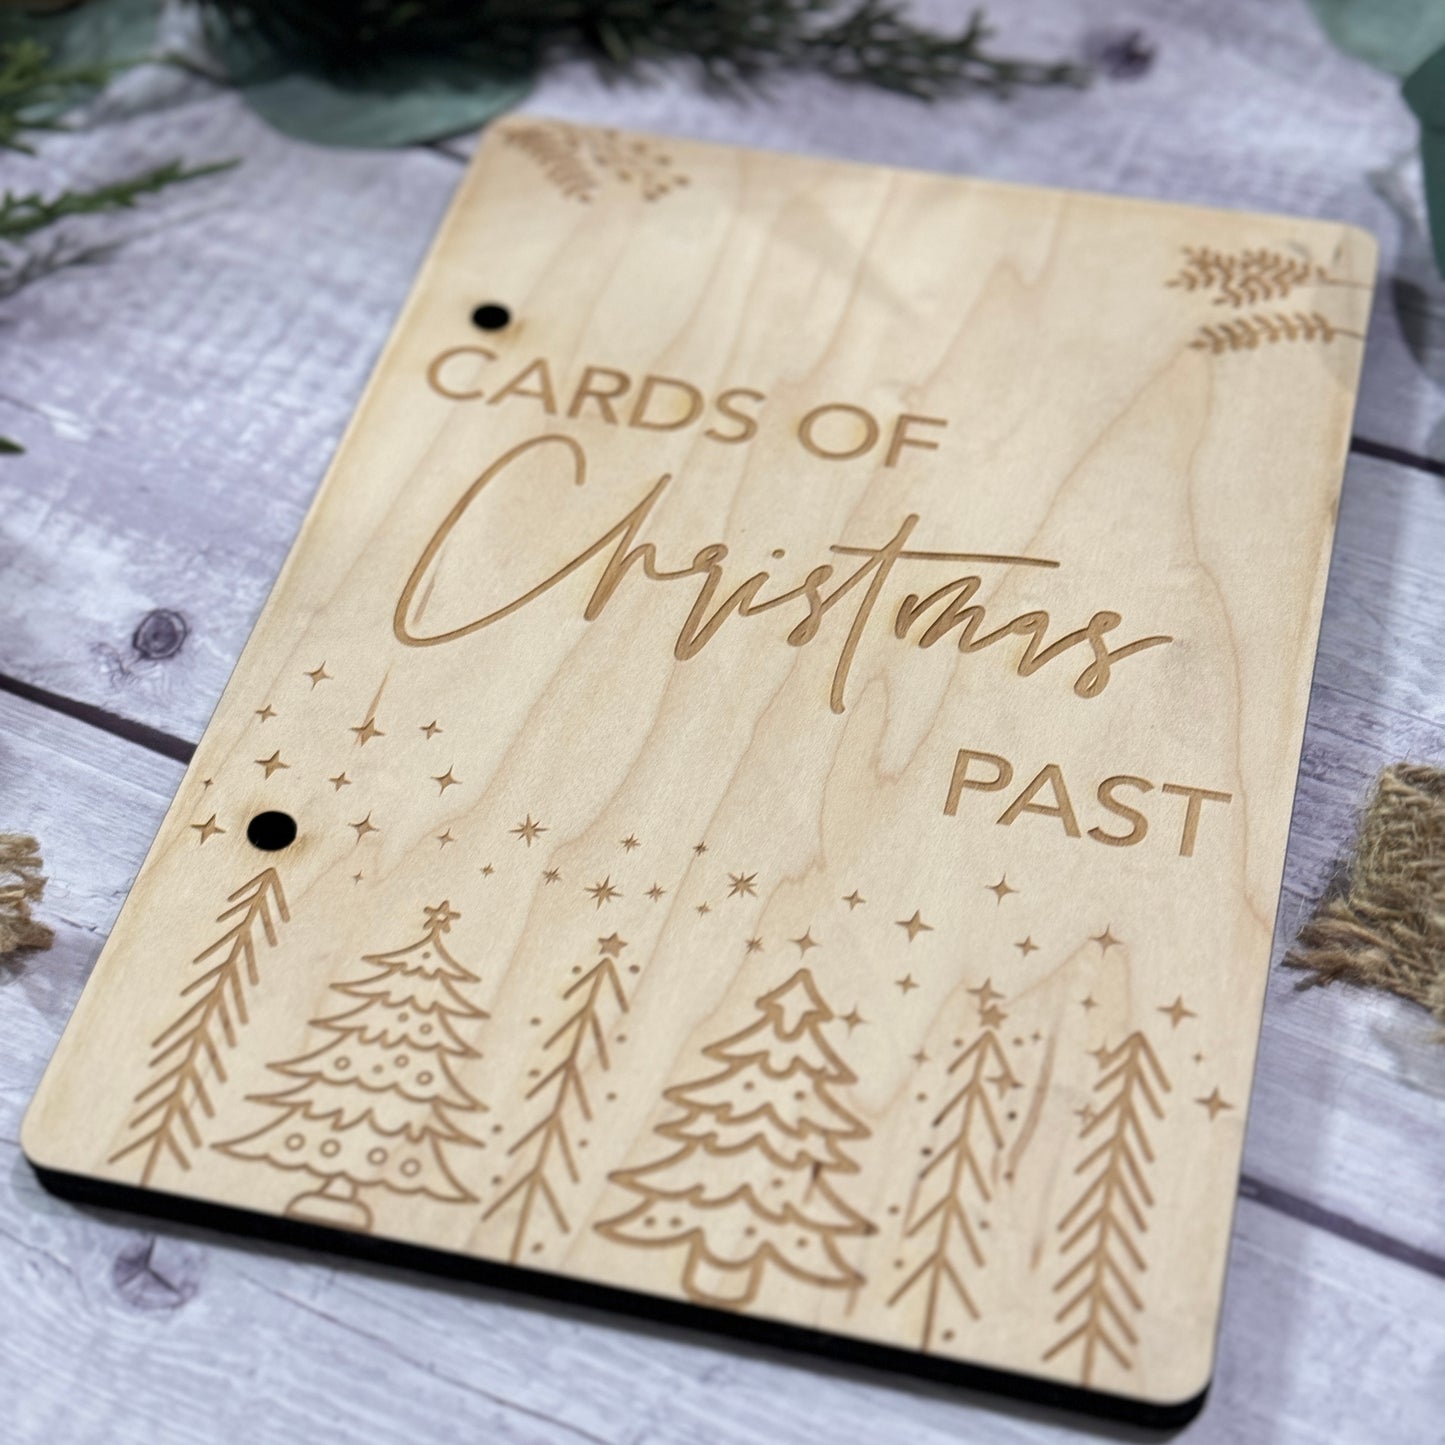 Cards of Christmas Past, Christmas Card Keeper, Christmas Card Storage